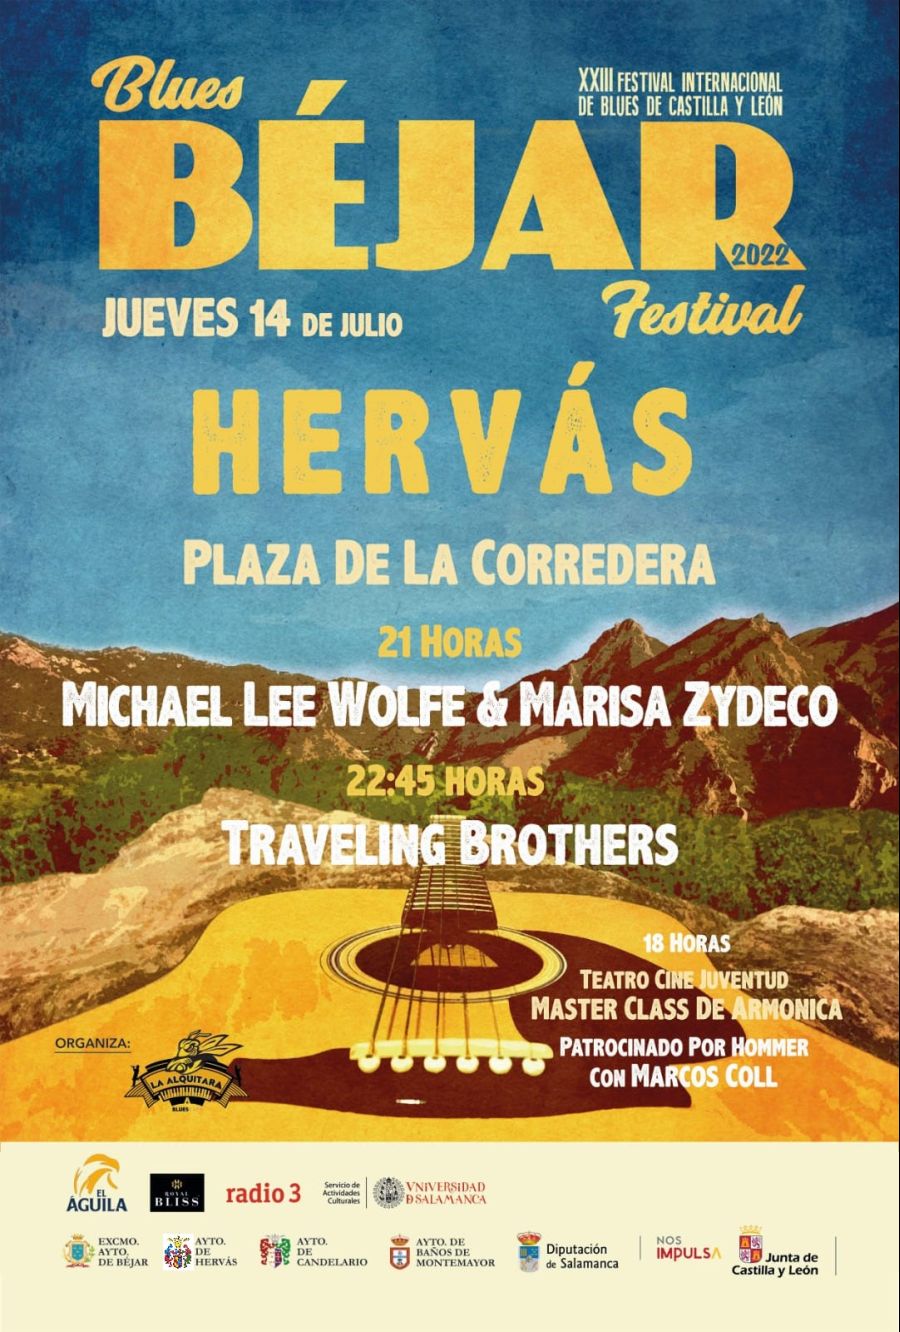 Festival de Blues de Béjar en Hervás